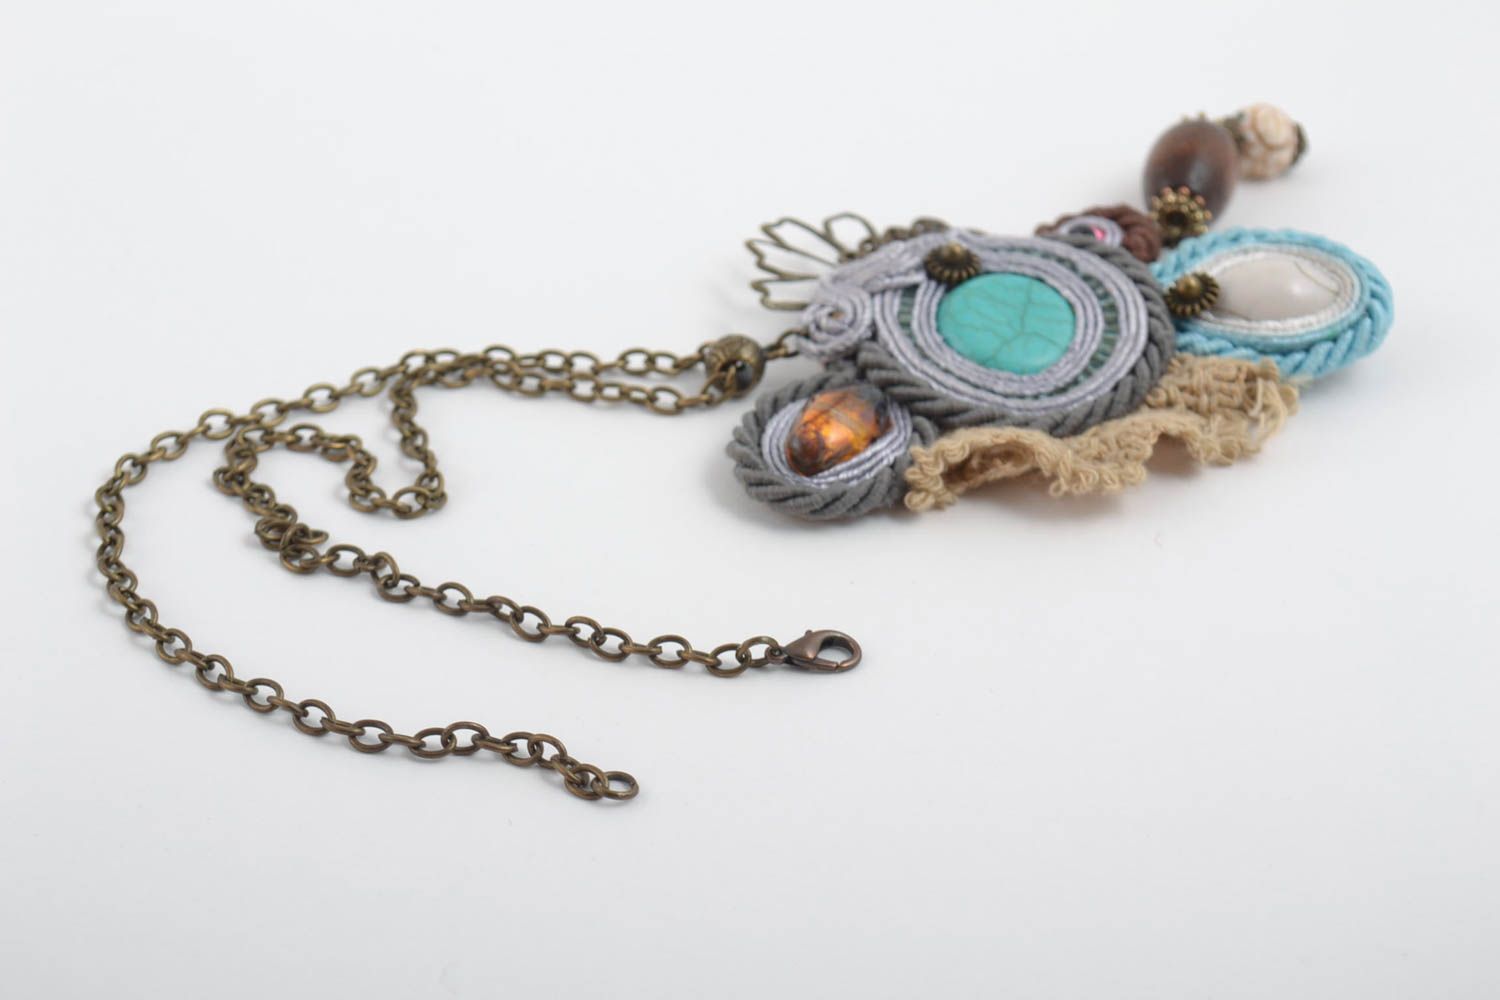 Handmade pendant soutache pendant designer pendant unusual gift for women photo 1